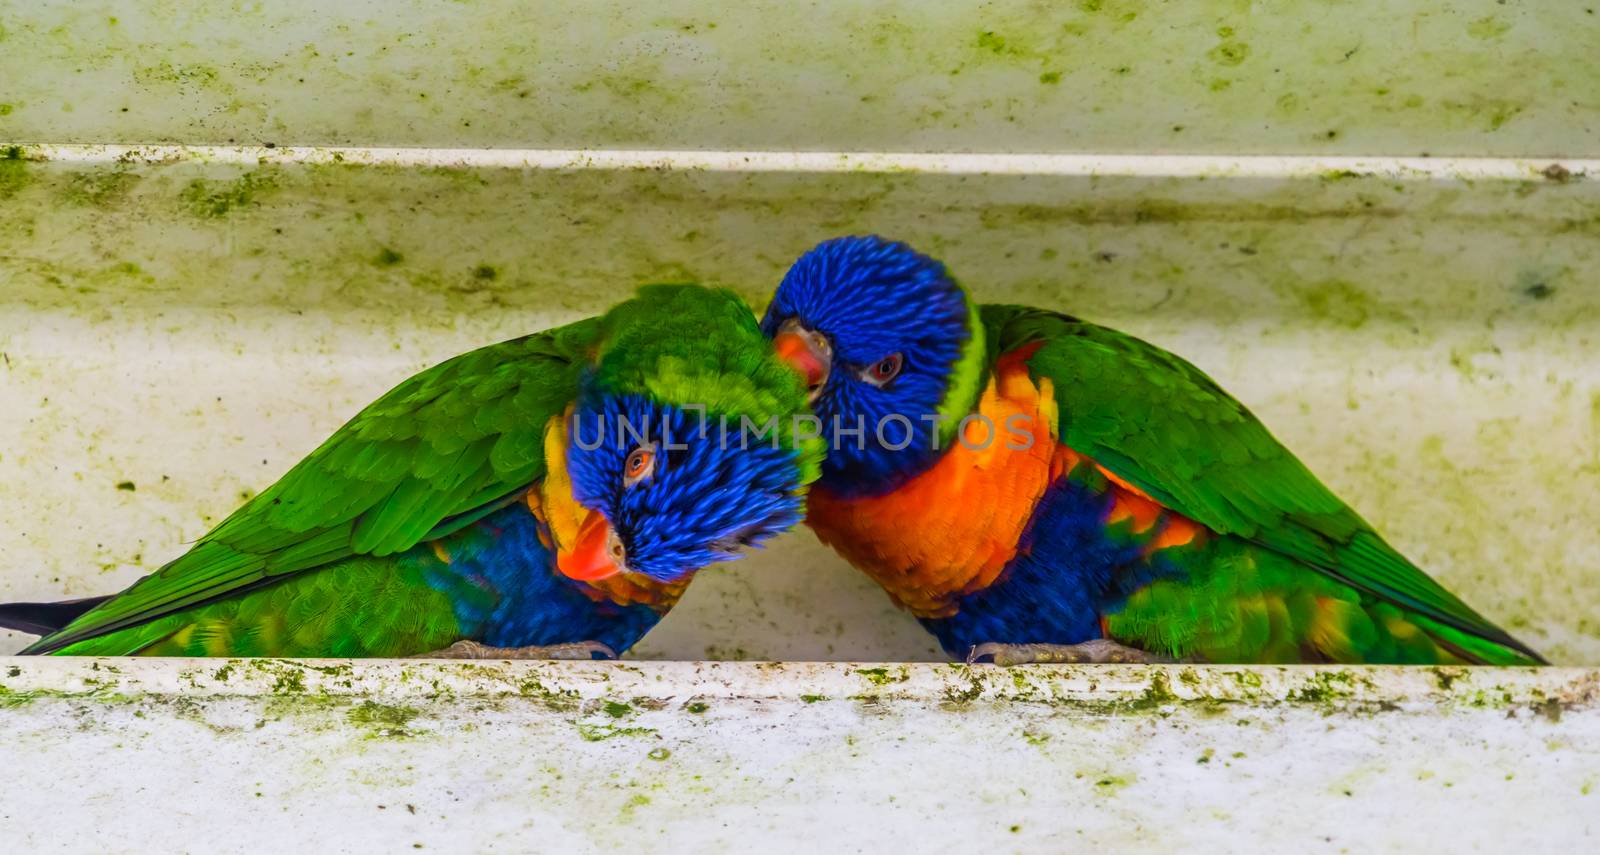 lovely rainbow parakeet couple preening each other, Typical bird behavior, Tropical animal specie from Australia by charlottebleijenberg